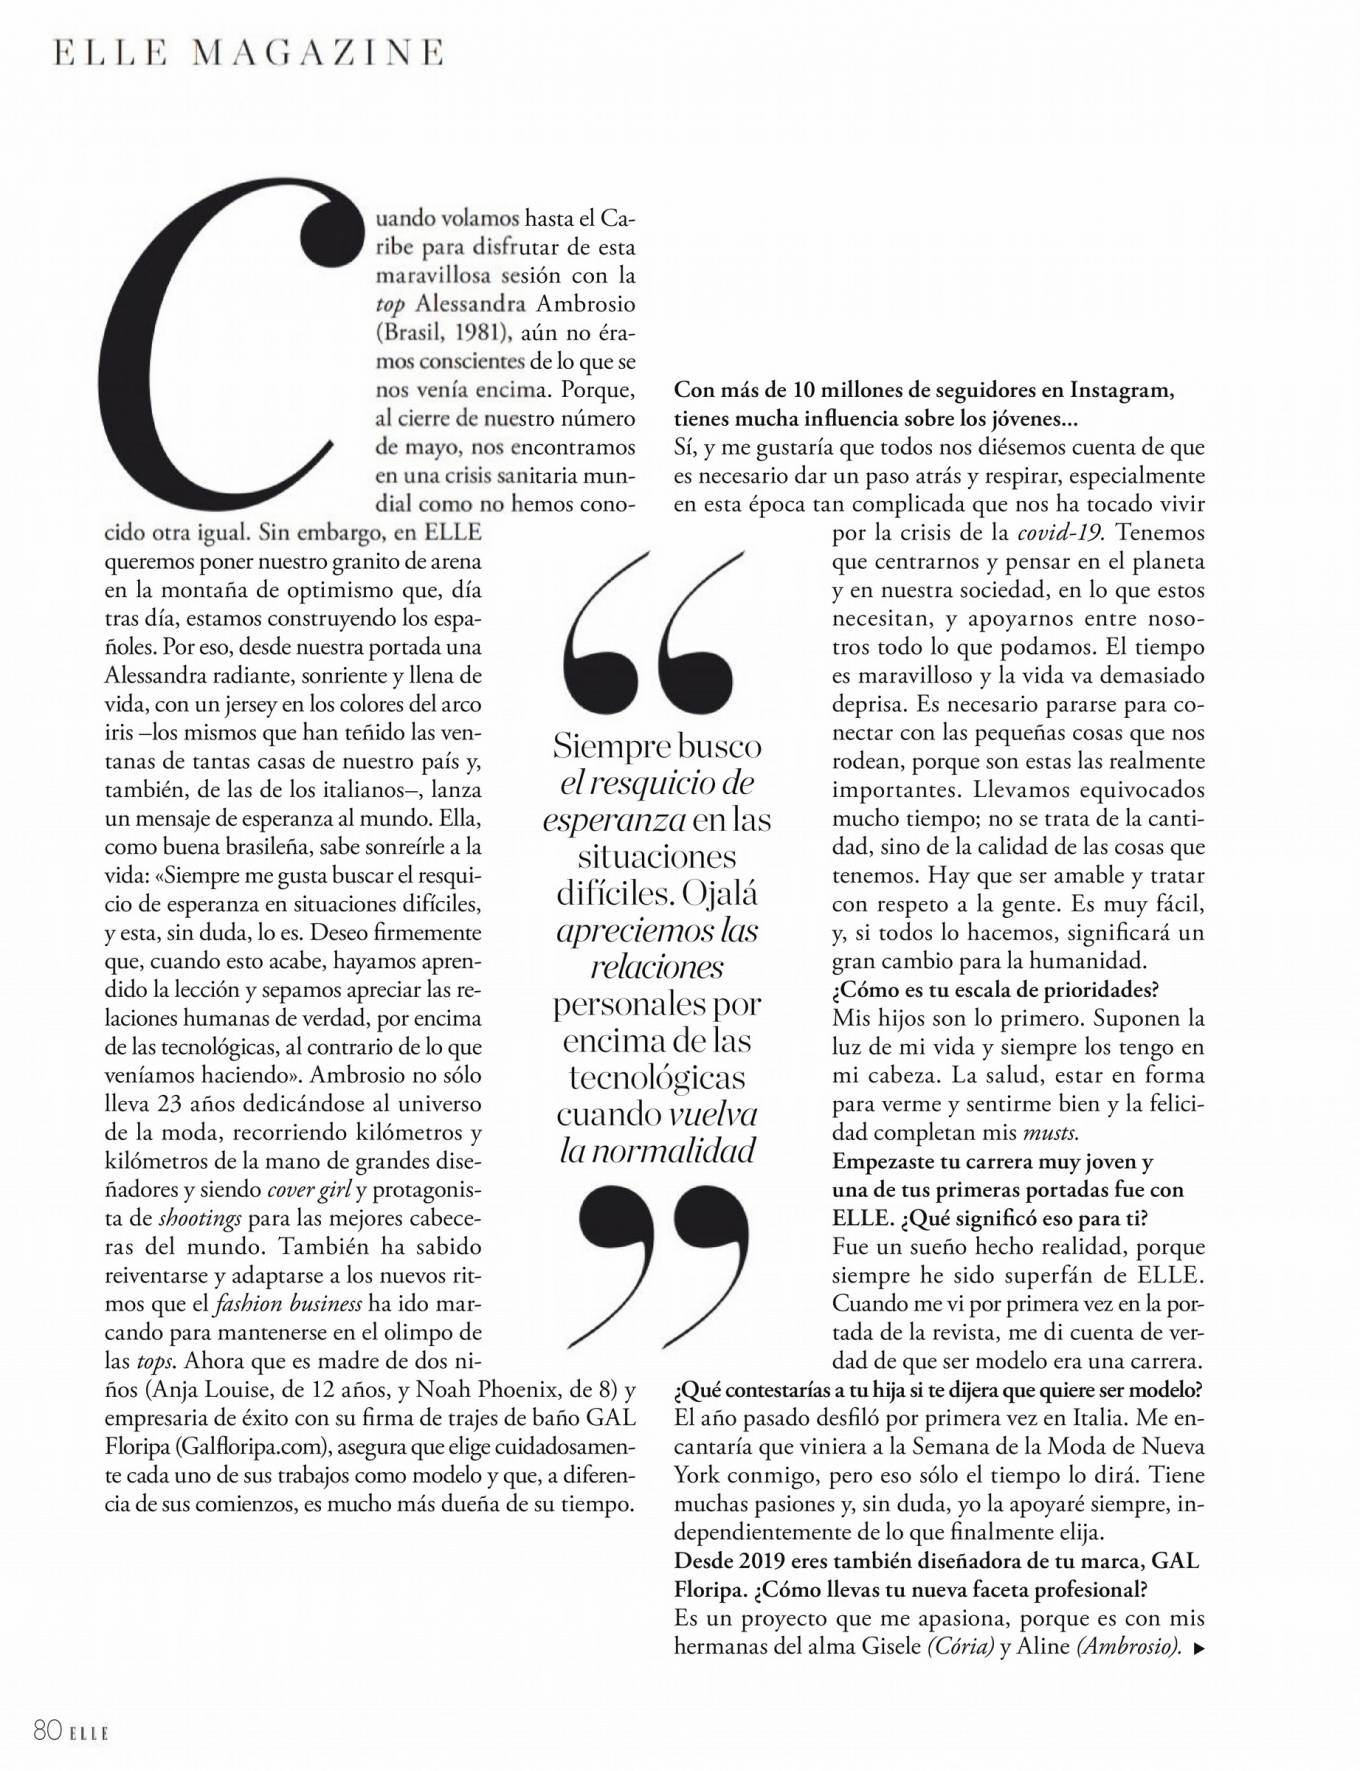 Alessandra Ambrosio â€“ Elle magazine (Espana May 2020)